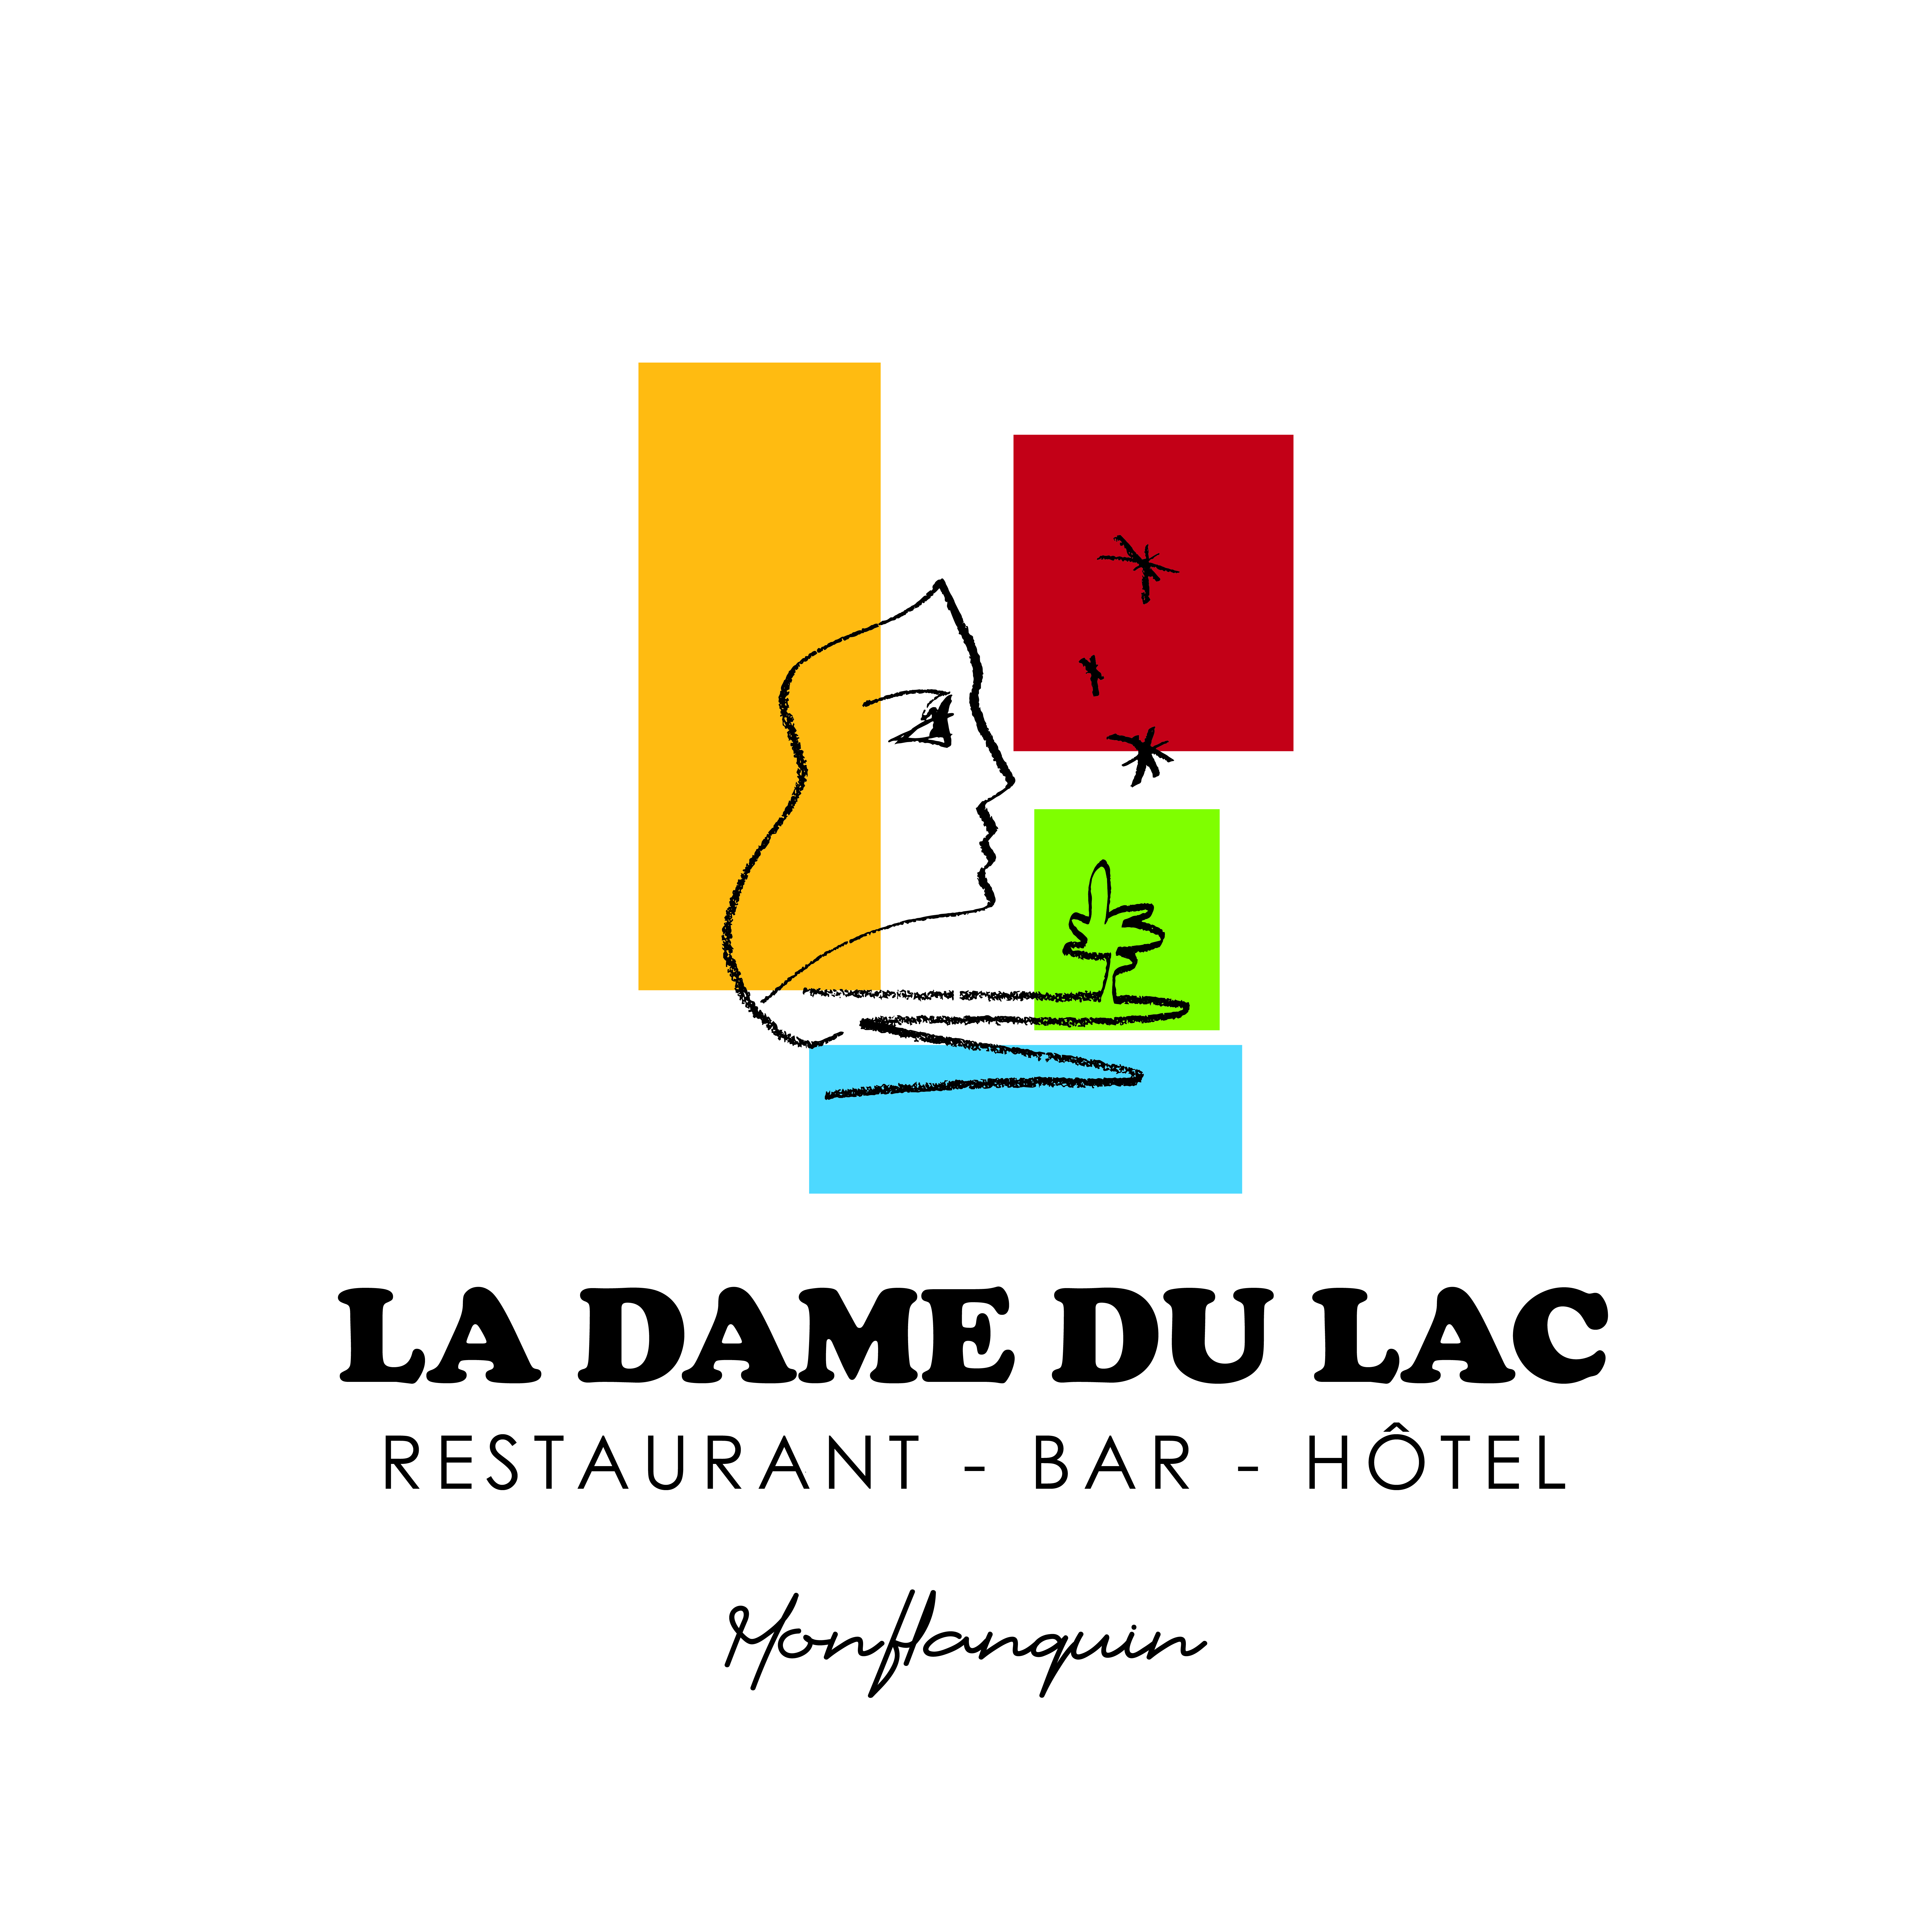 bgc.studiocreatif, La Dame du Lac